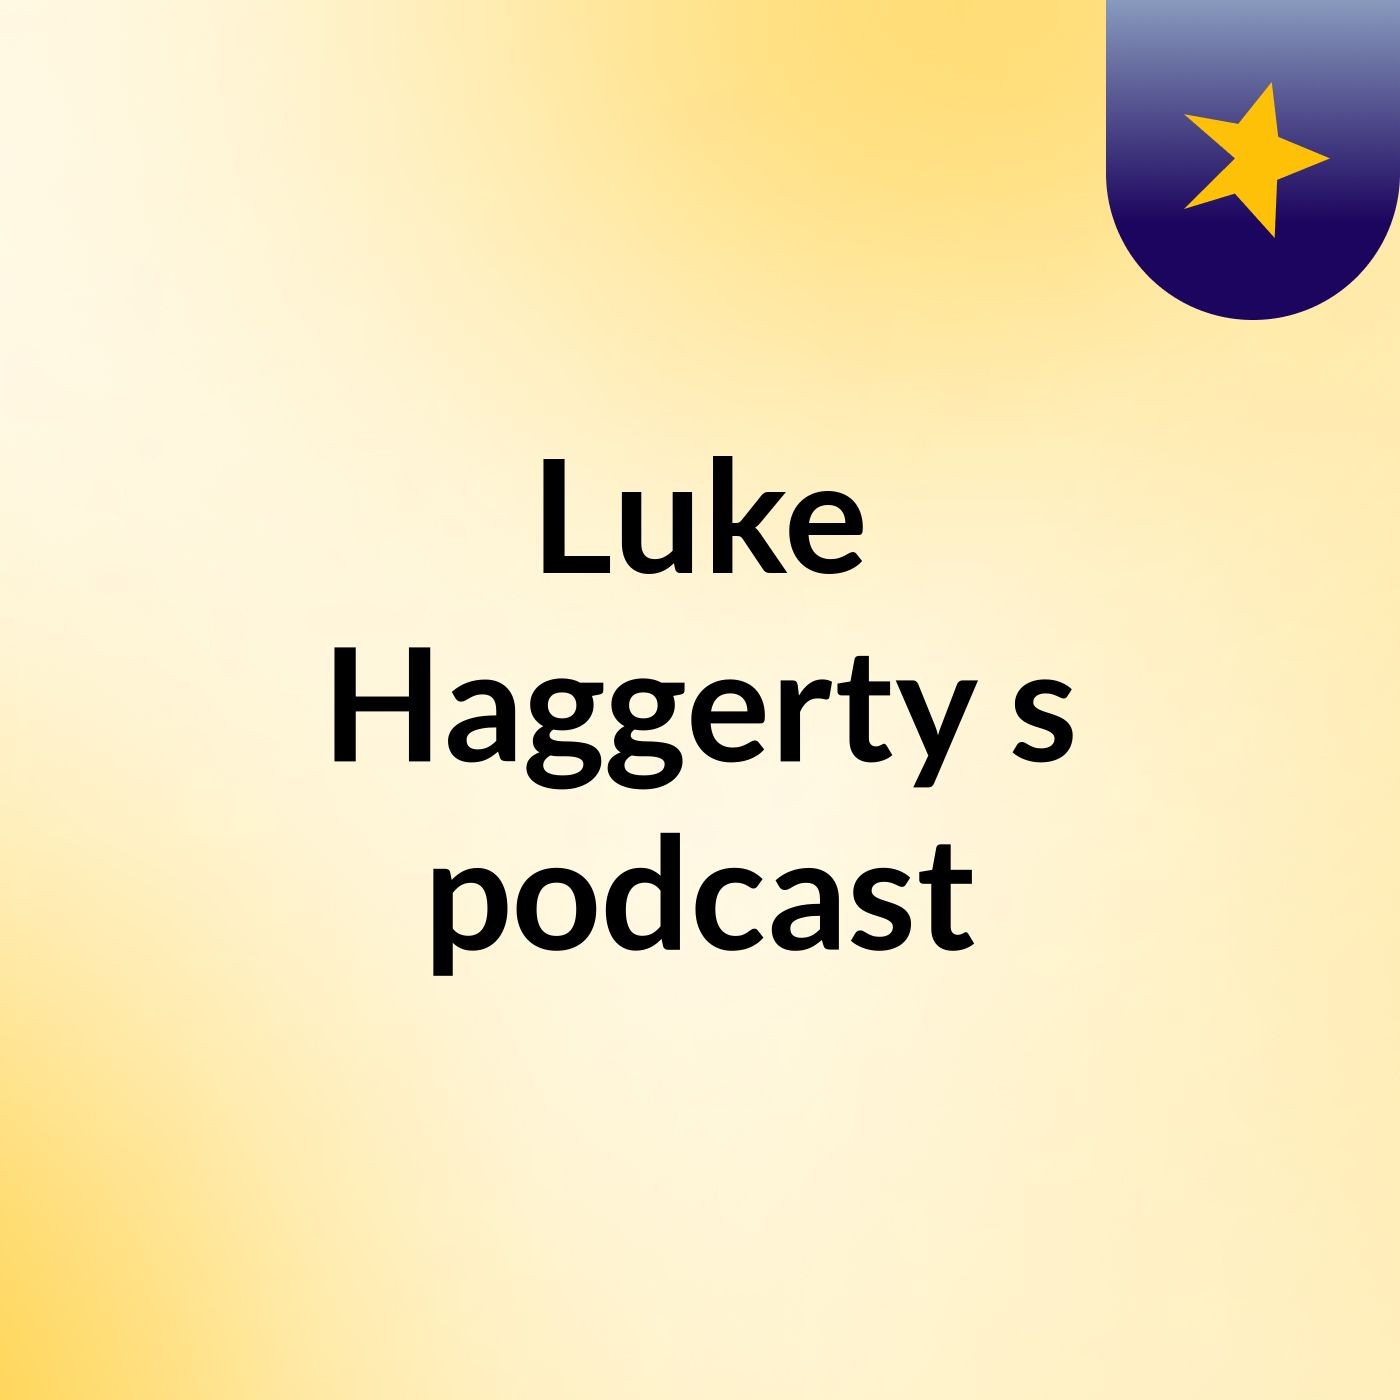 Episode 4 - Luke Haggerty's podcast